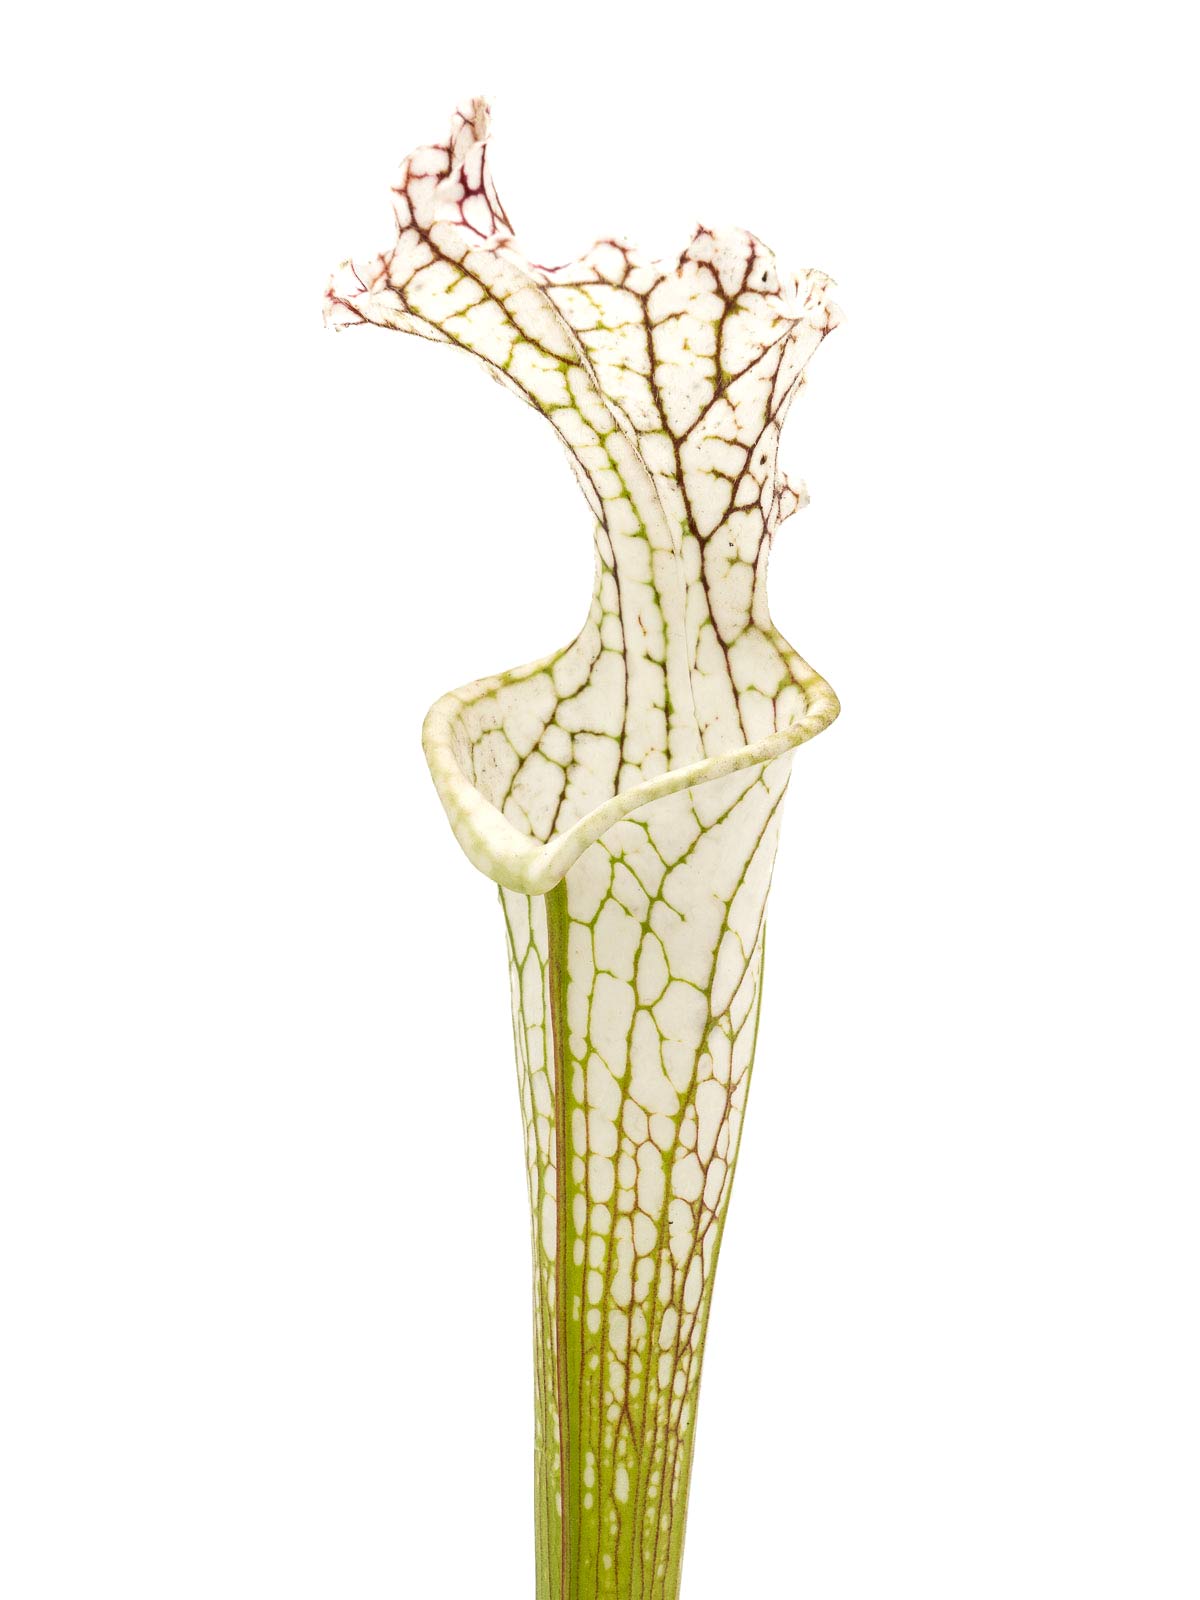 Sarracenia leucophylla - MK L15, Citronelle, Mobile County, Alabama